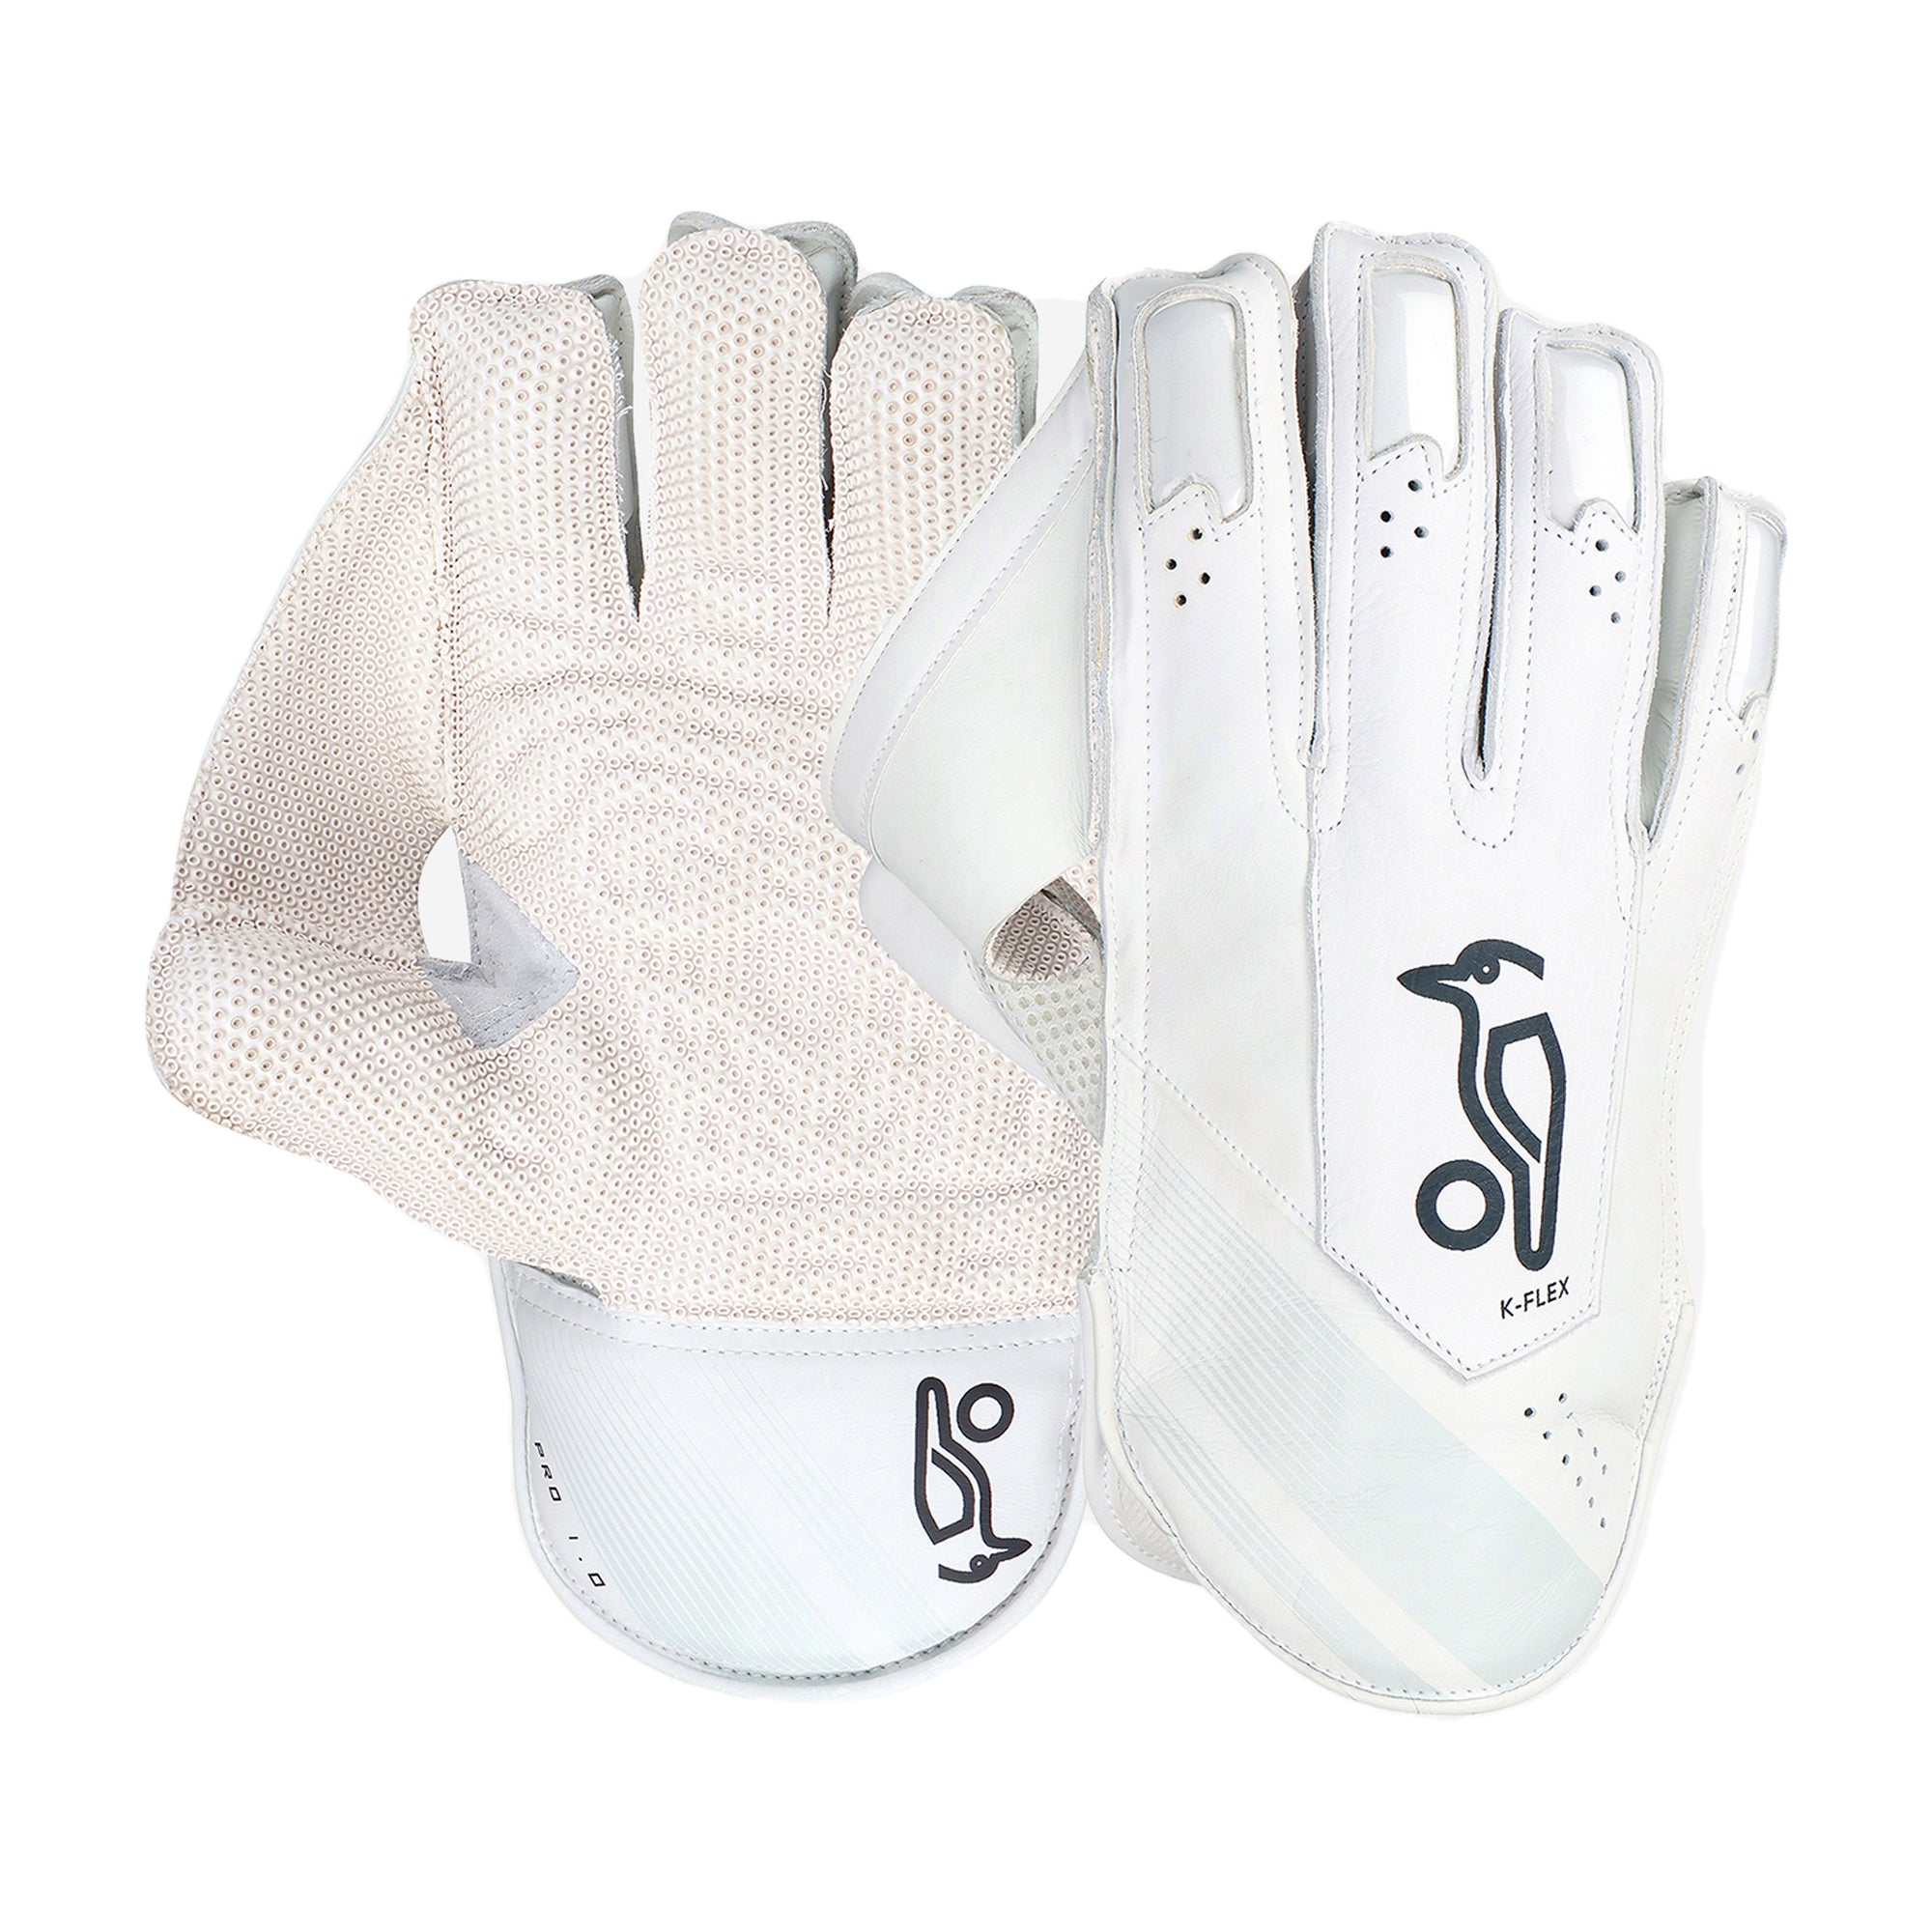 Kookaburra Pro 1.0 Cricket Wicket Keeping Gloves